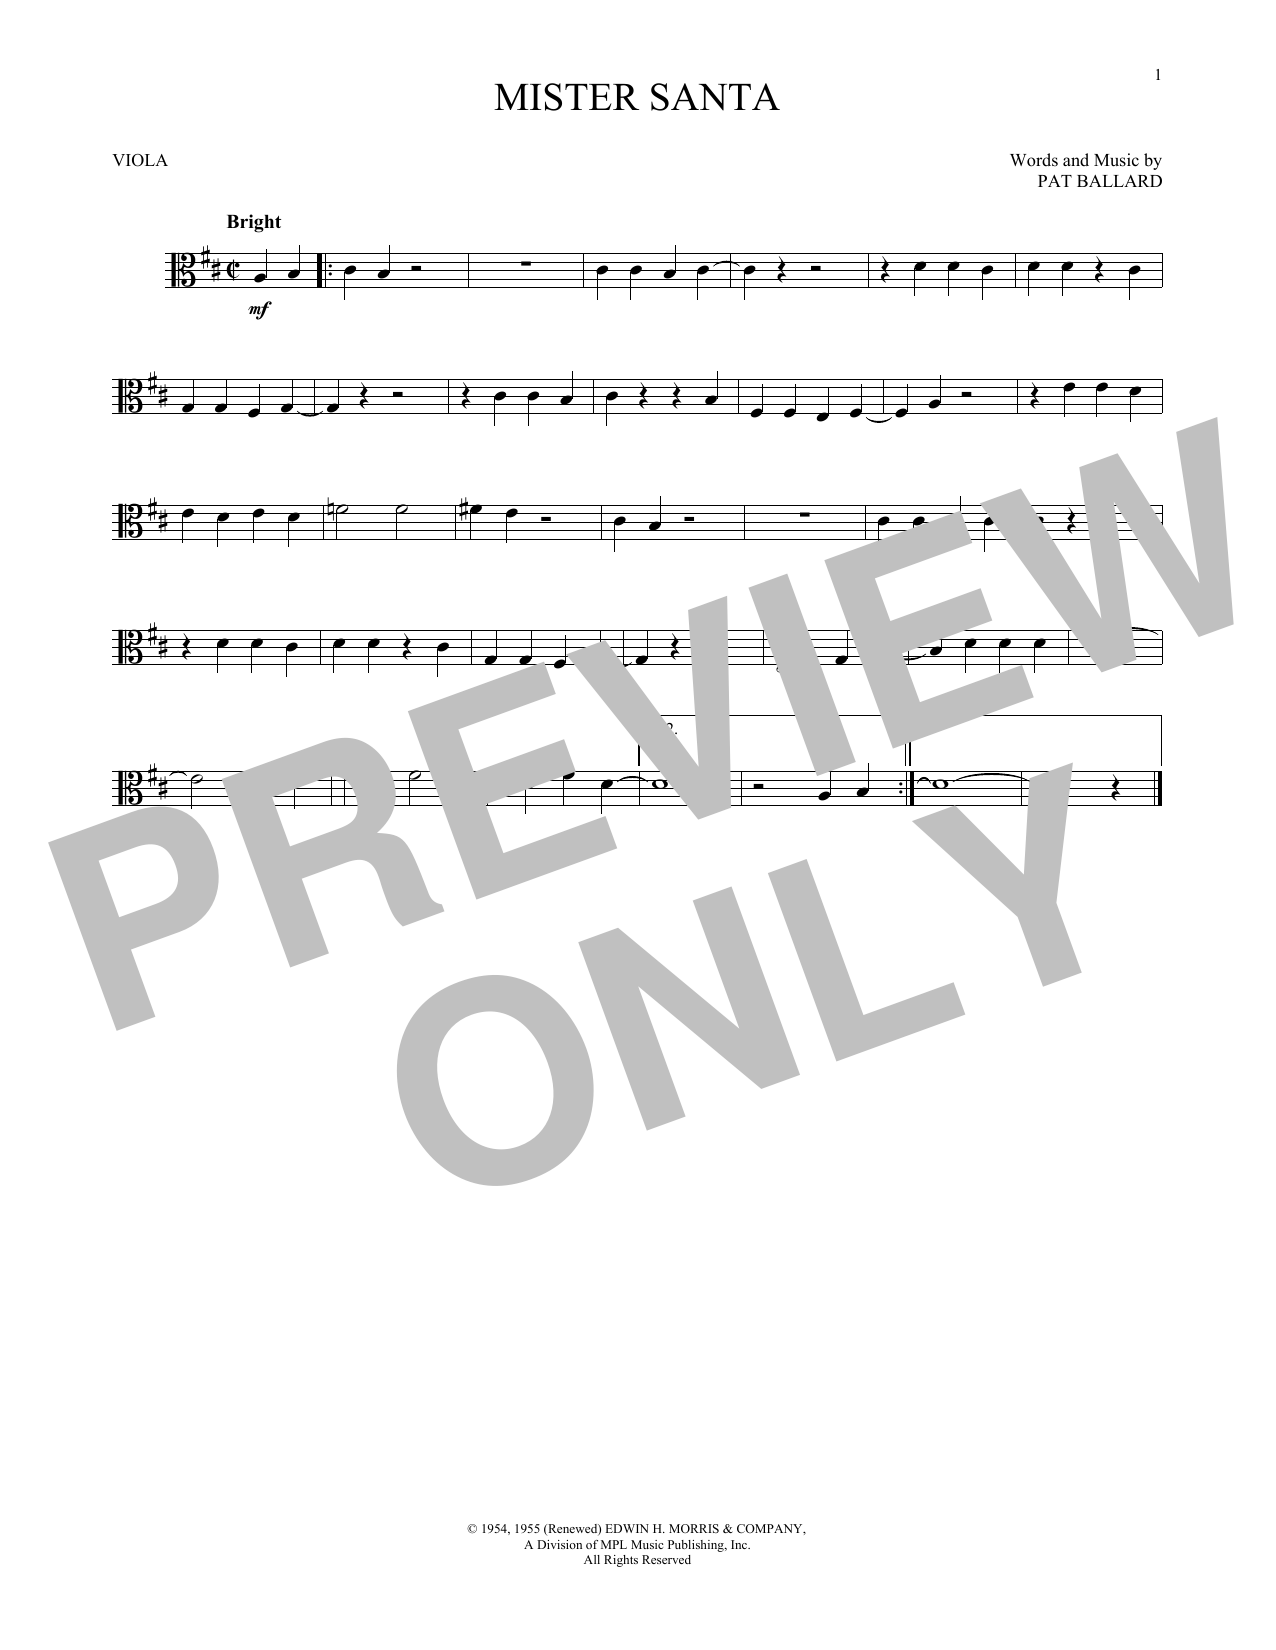 Amy Grant Mister Santa Sheet Music Notes & Chords for Violin - Download or Print PDF